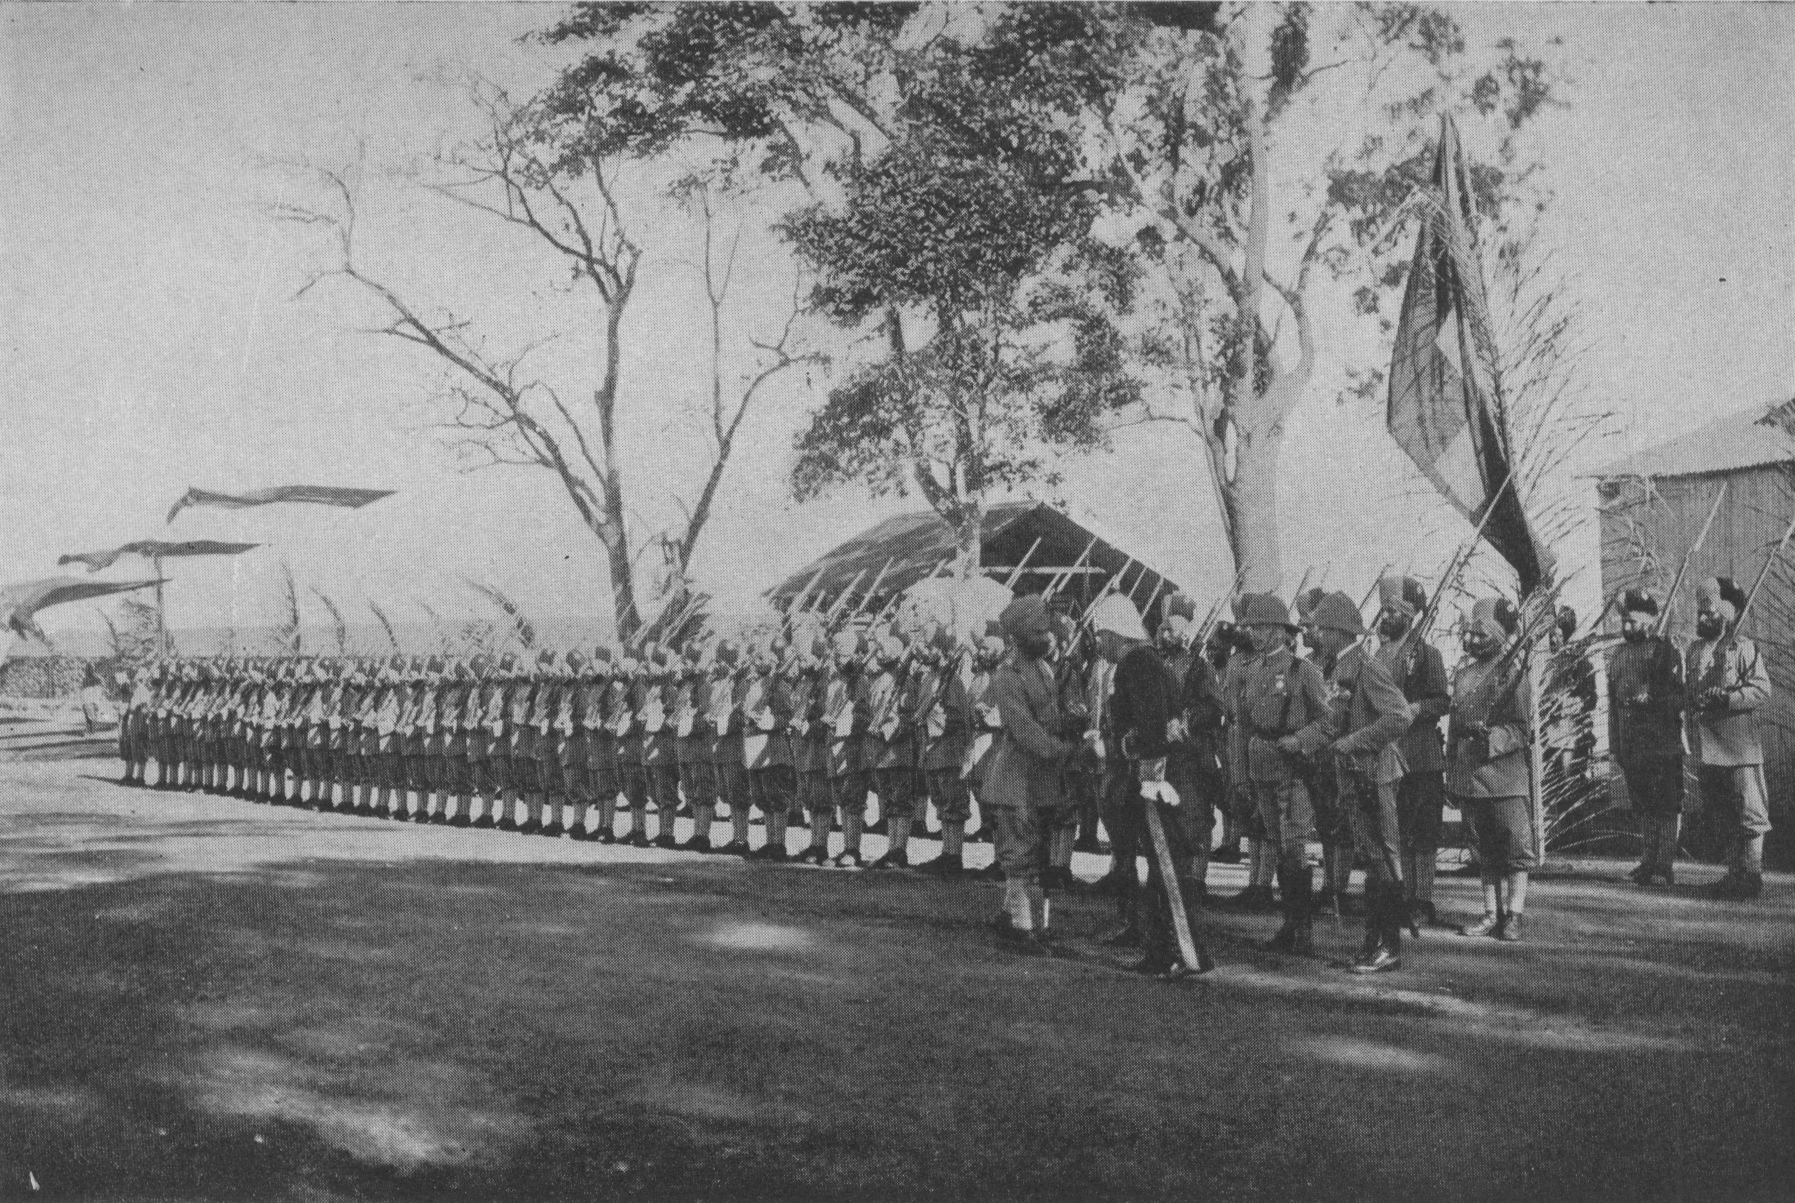 regimented line of men in uniform with rifles